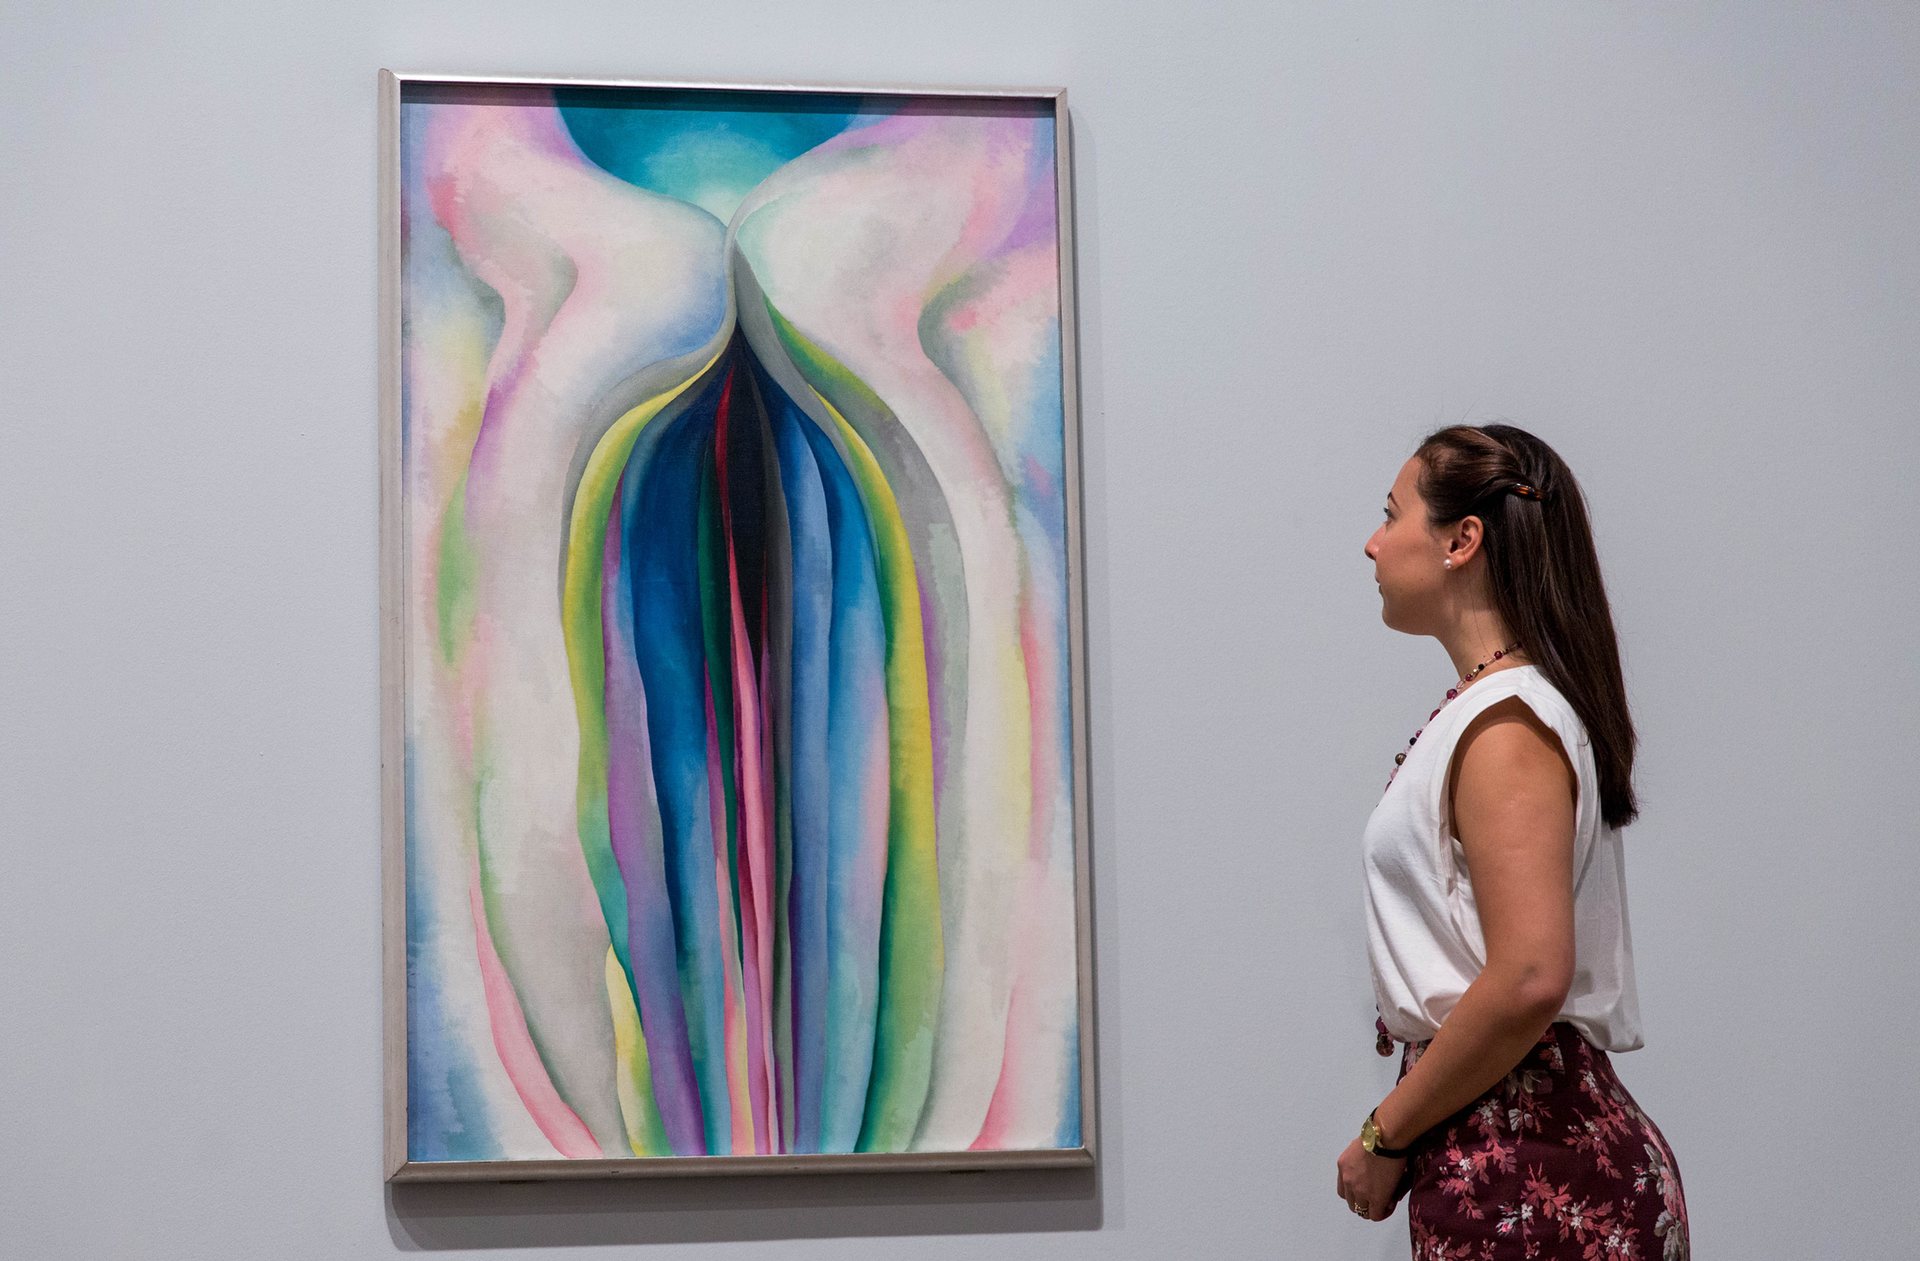 Georgia O’Keeffe Tate Modern review at www.cellophaneland.com